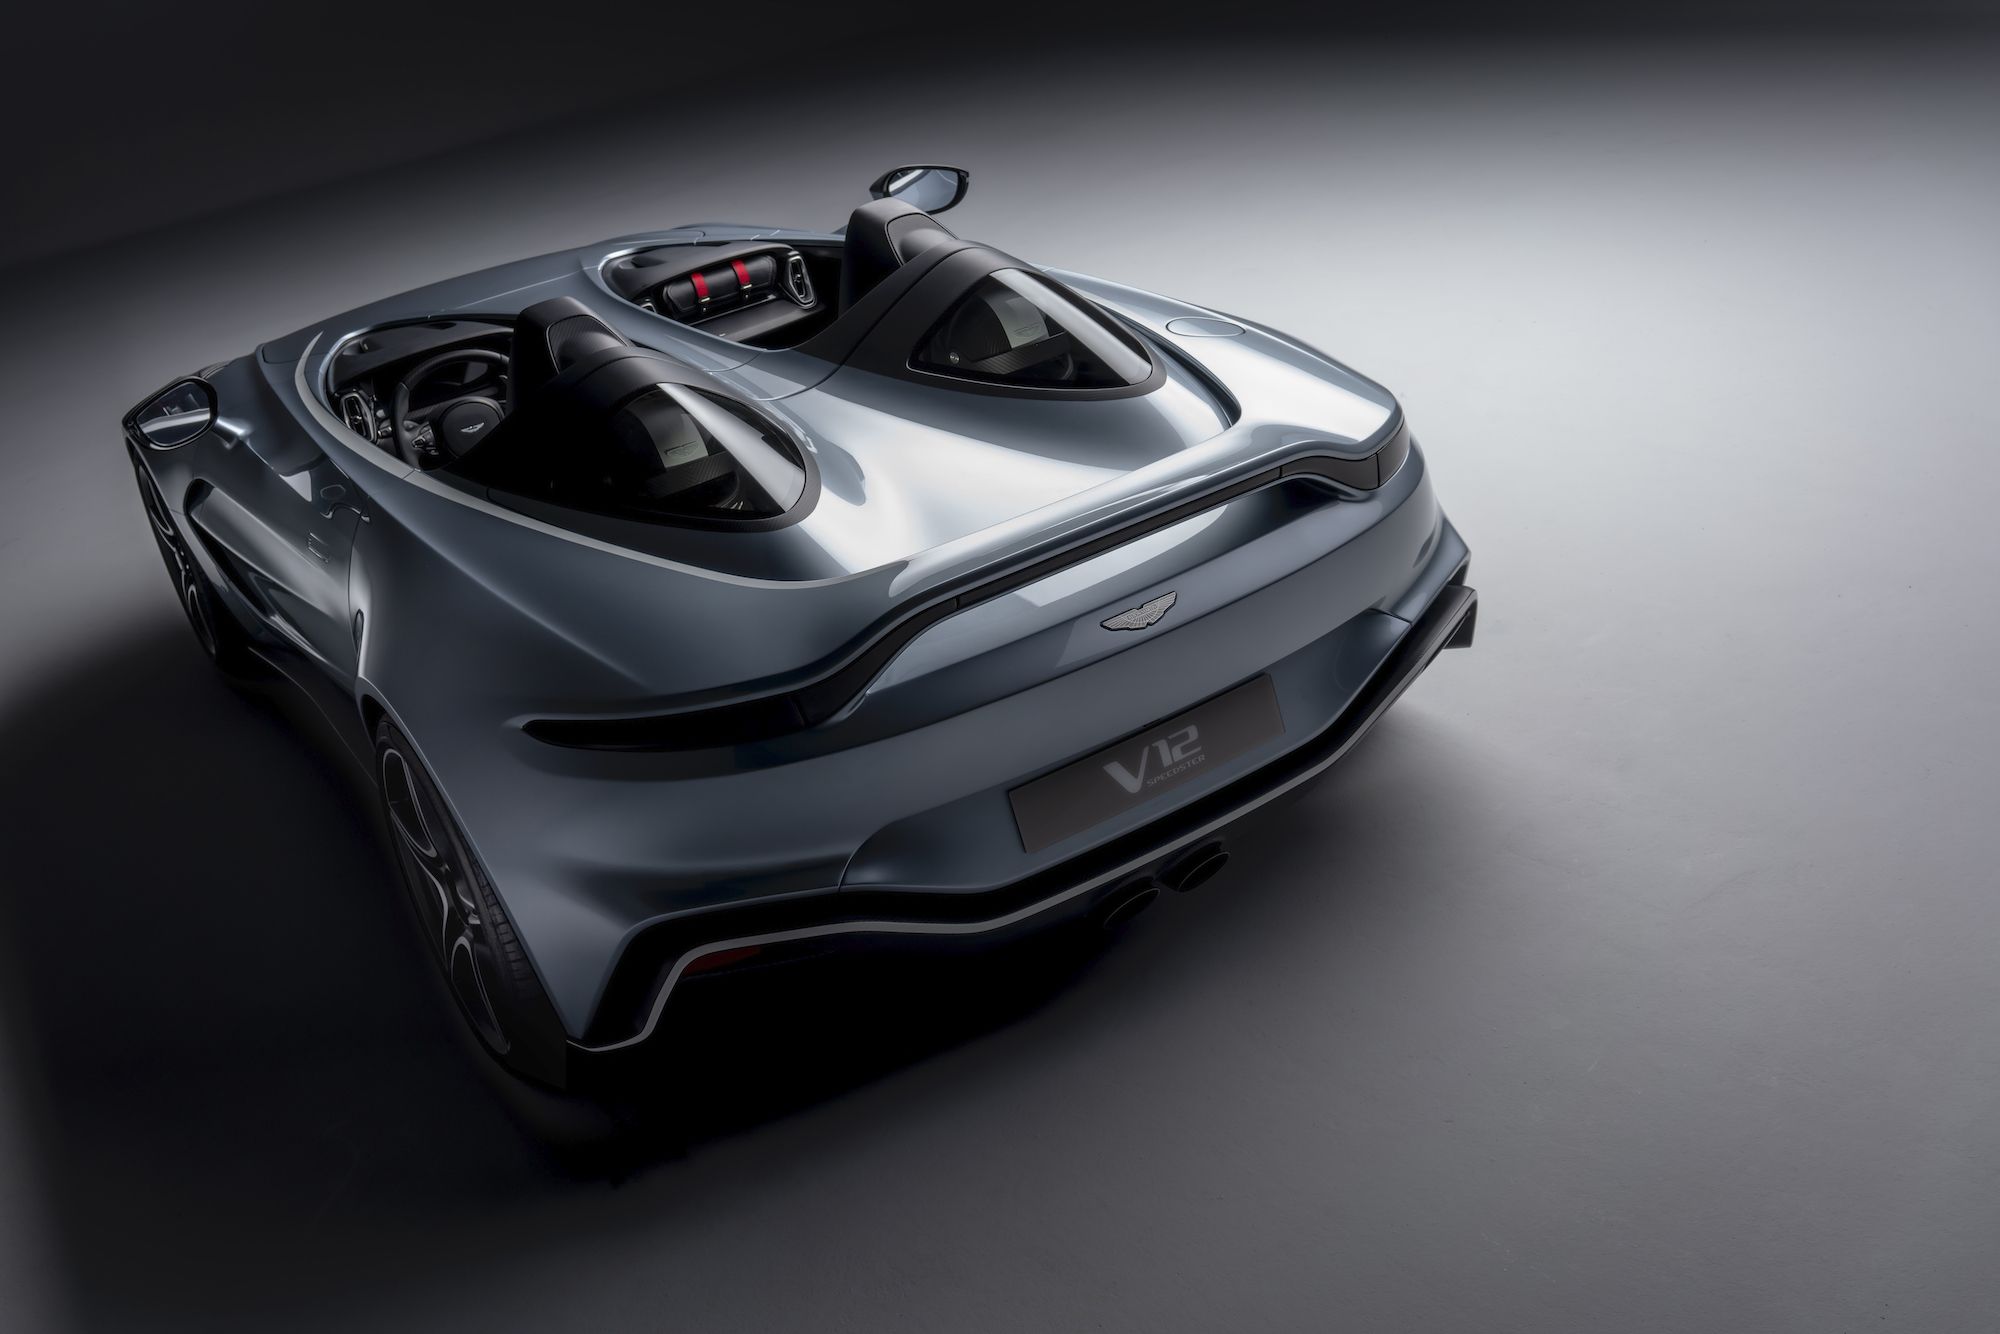 The $000 Aston Martin V12 Speedster Is A Jet Inspired Supercar